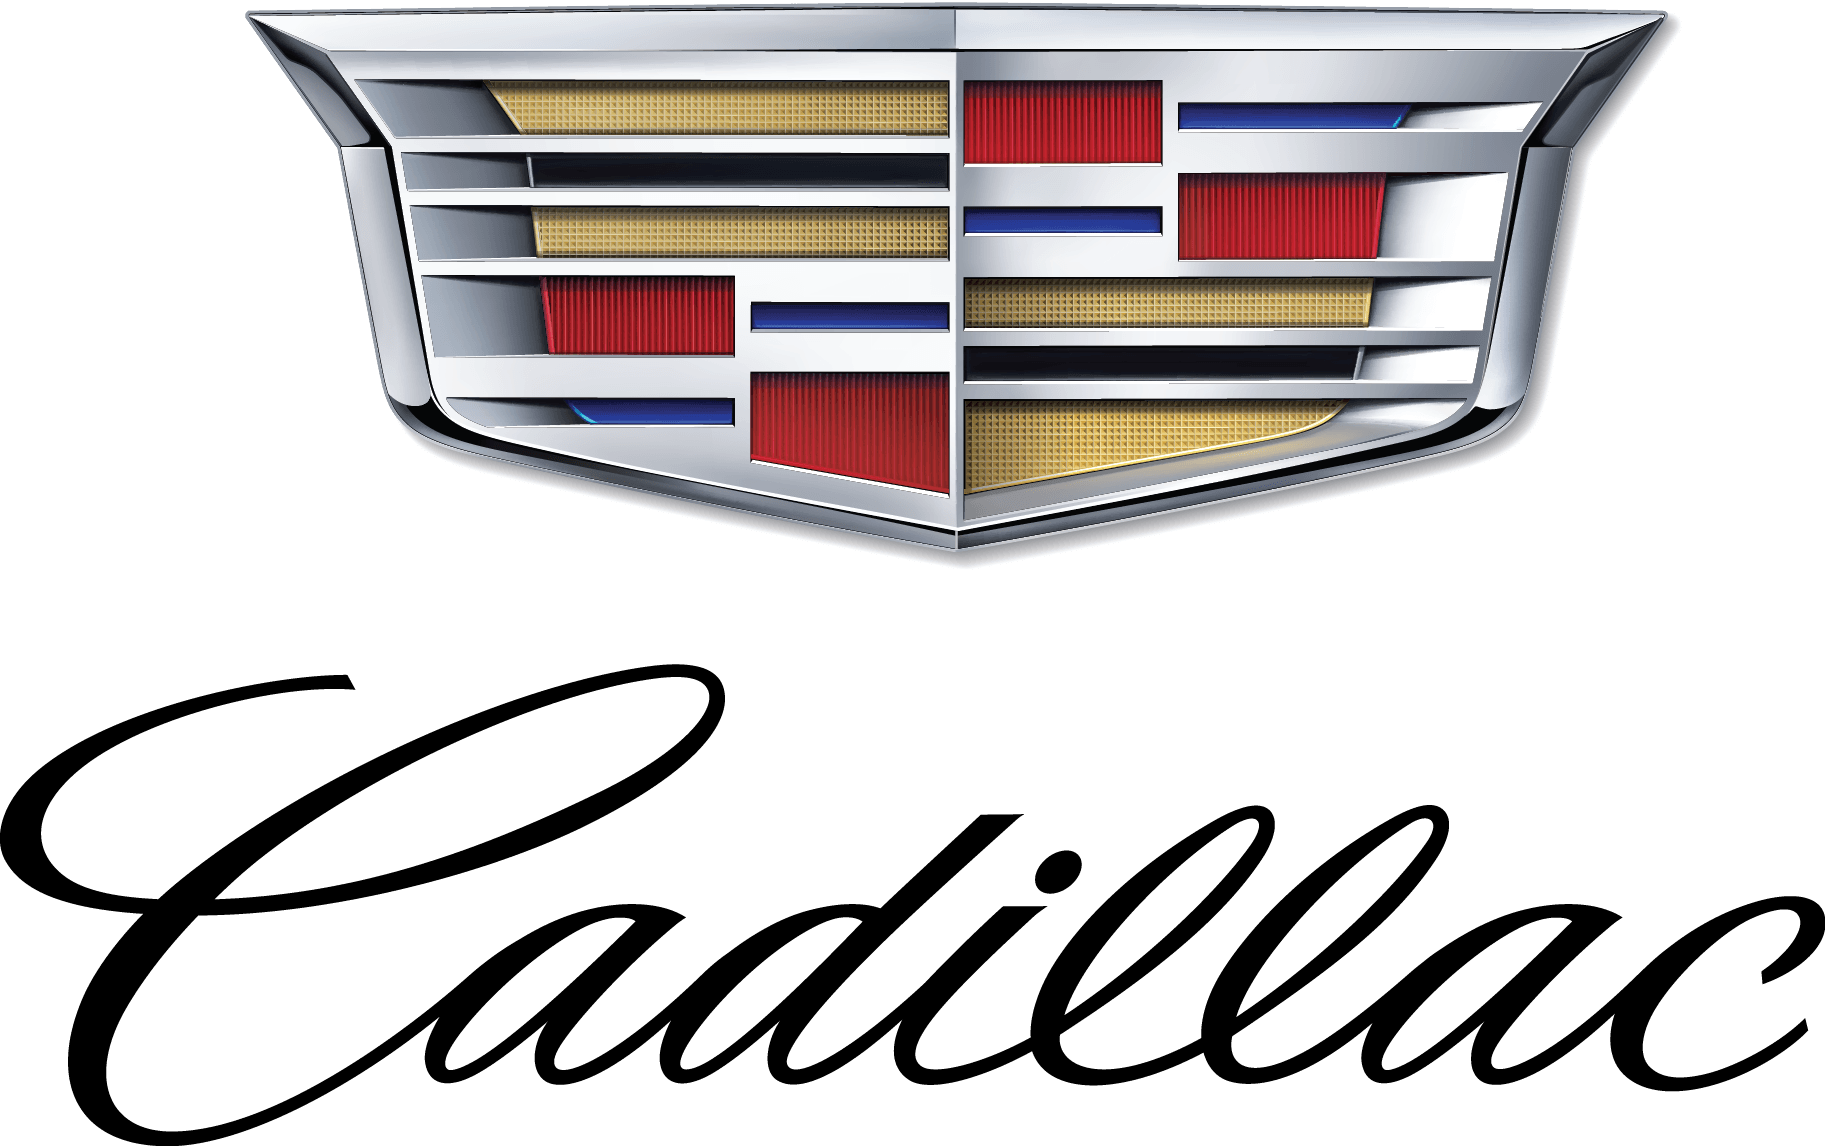 2014 New Cadillac Logo - Explore New Inventory at Serra of Jackson in Jackson, TN. Serving